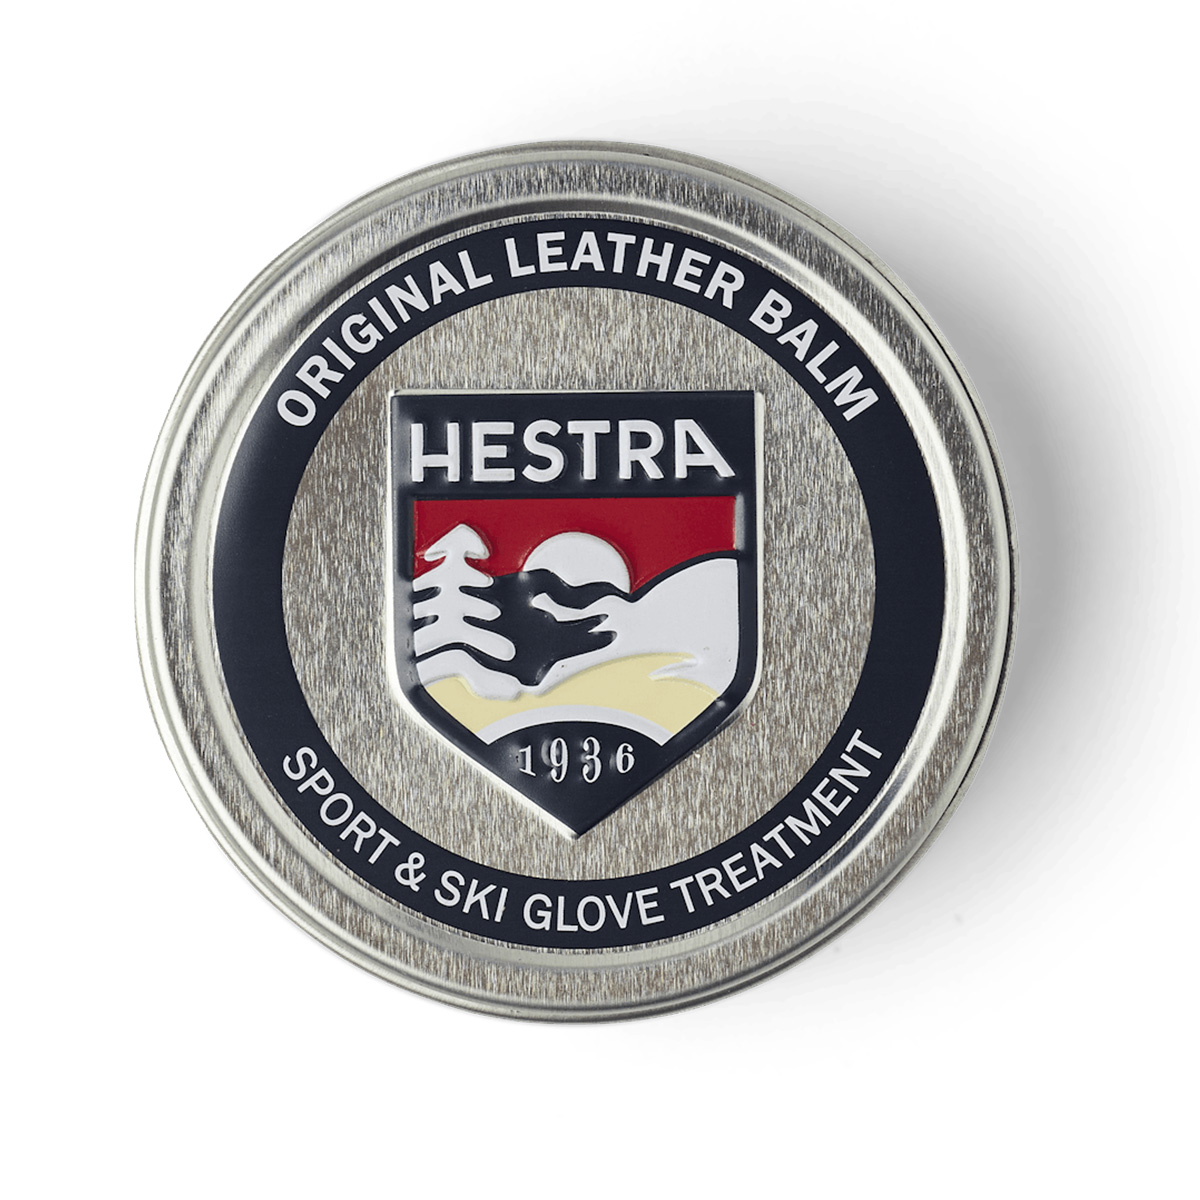 Hestra Original Leather Balm